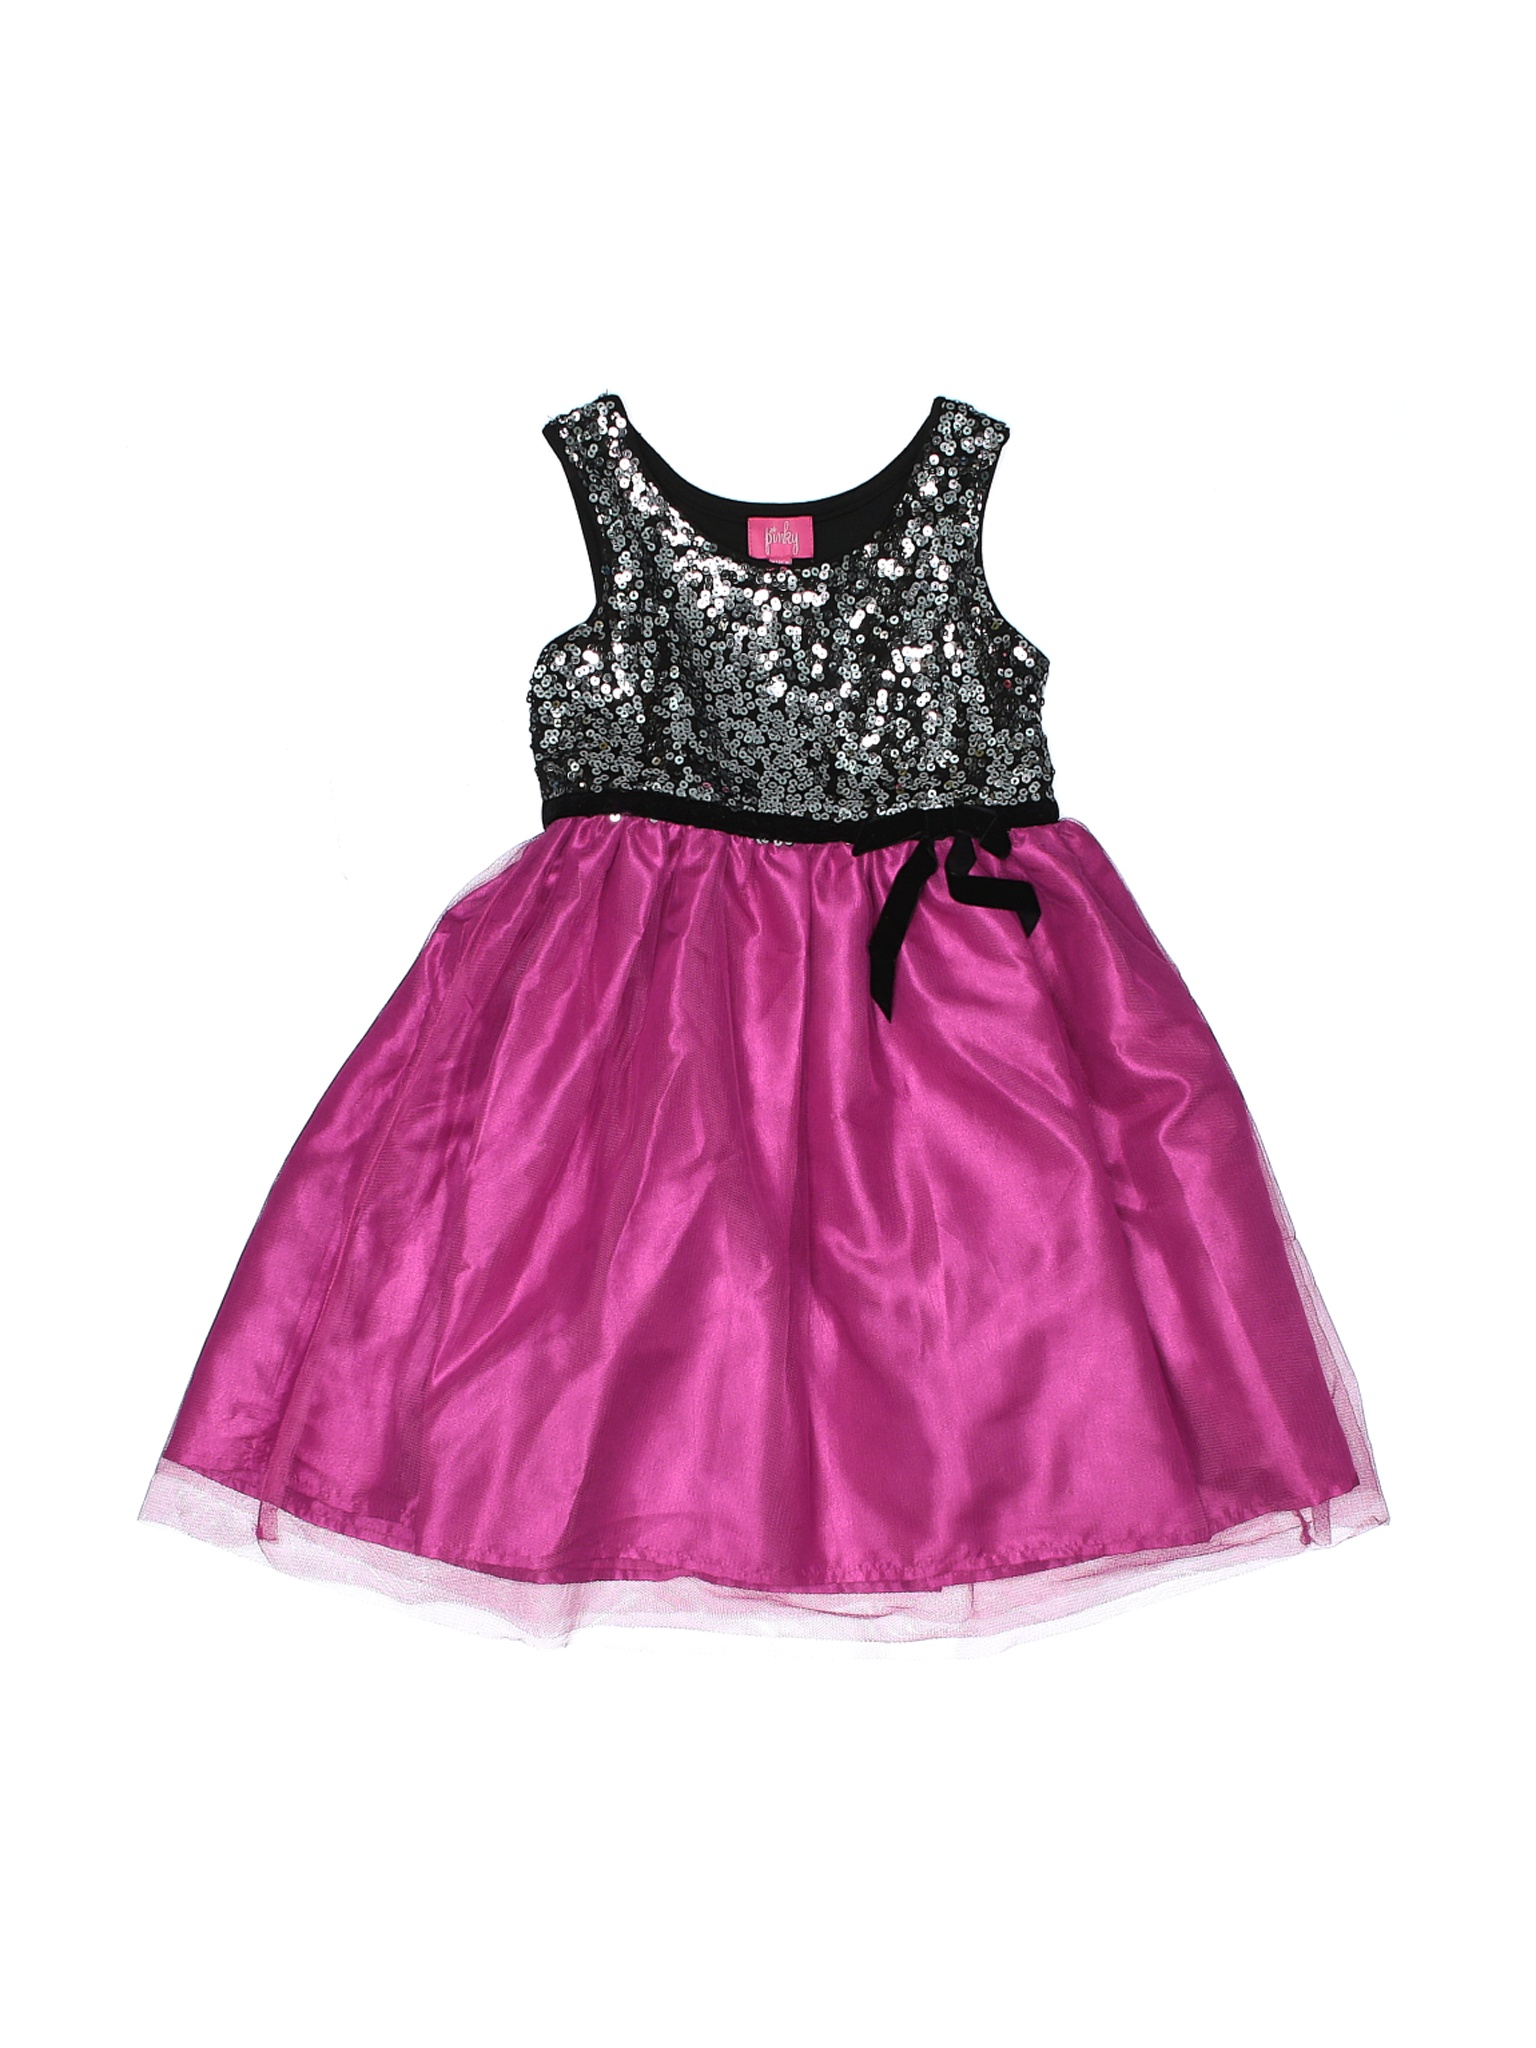 Pinky Girls Pink Special Occasion Dress 6X | eBay